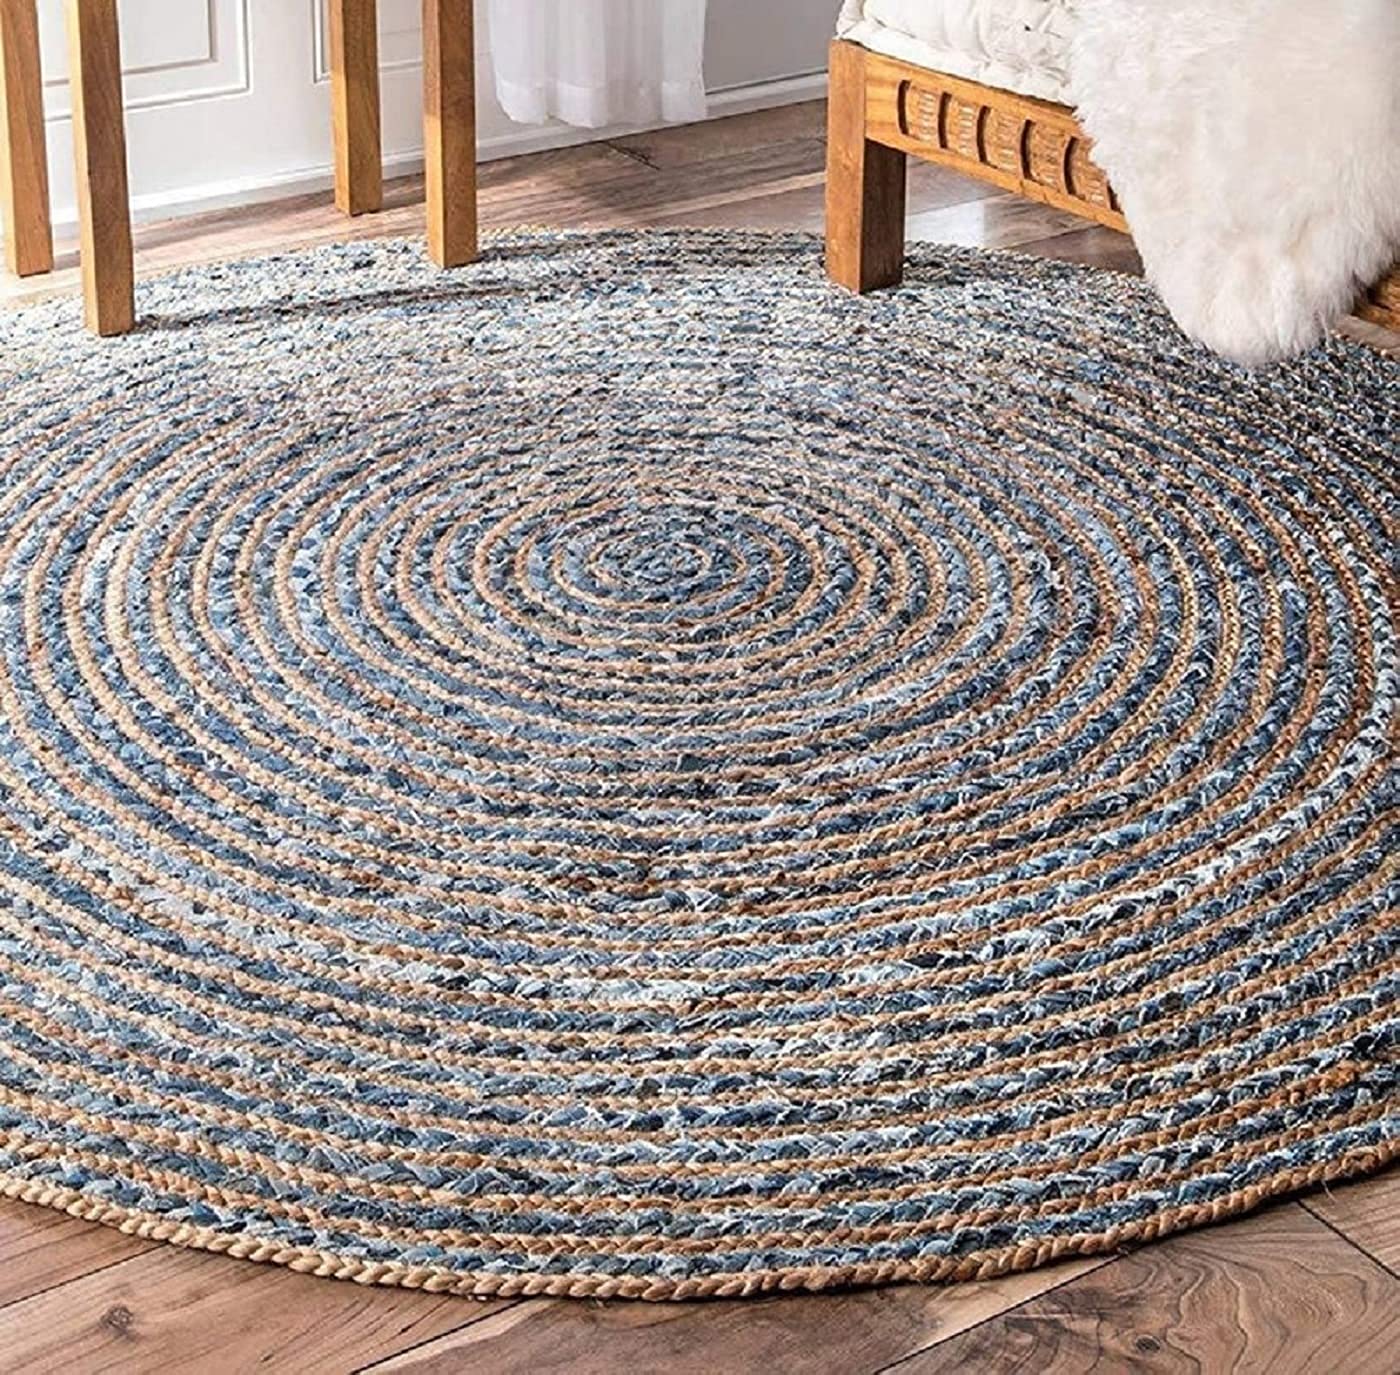 Handcrafted Jute rug showcasing a unique blend 